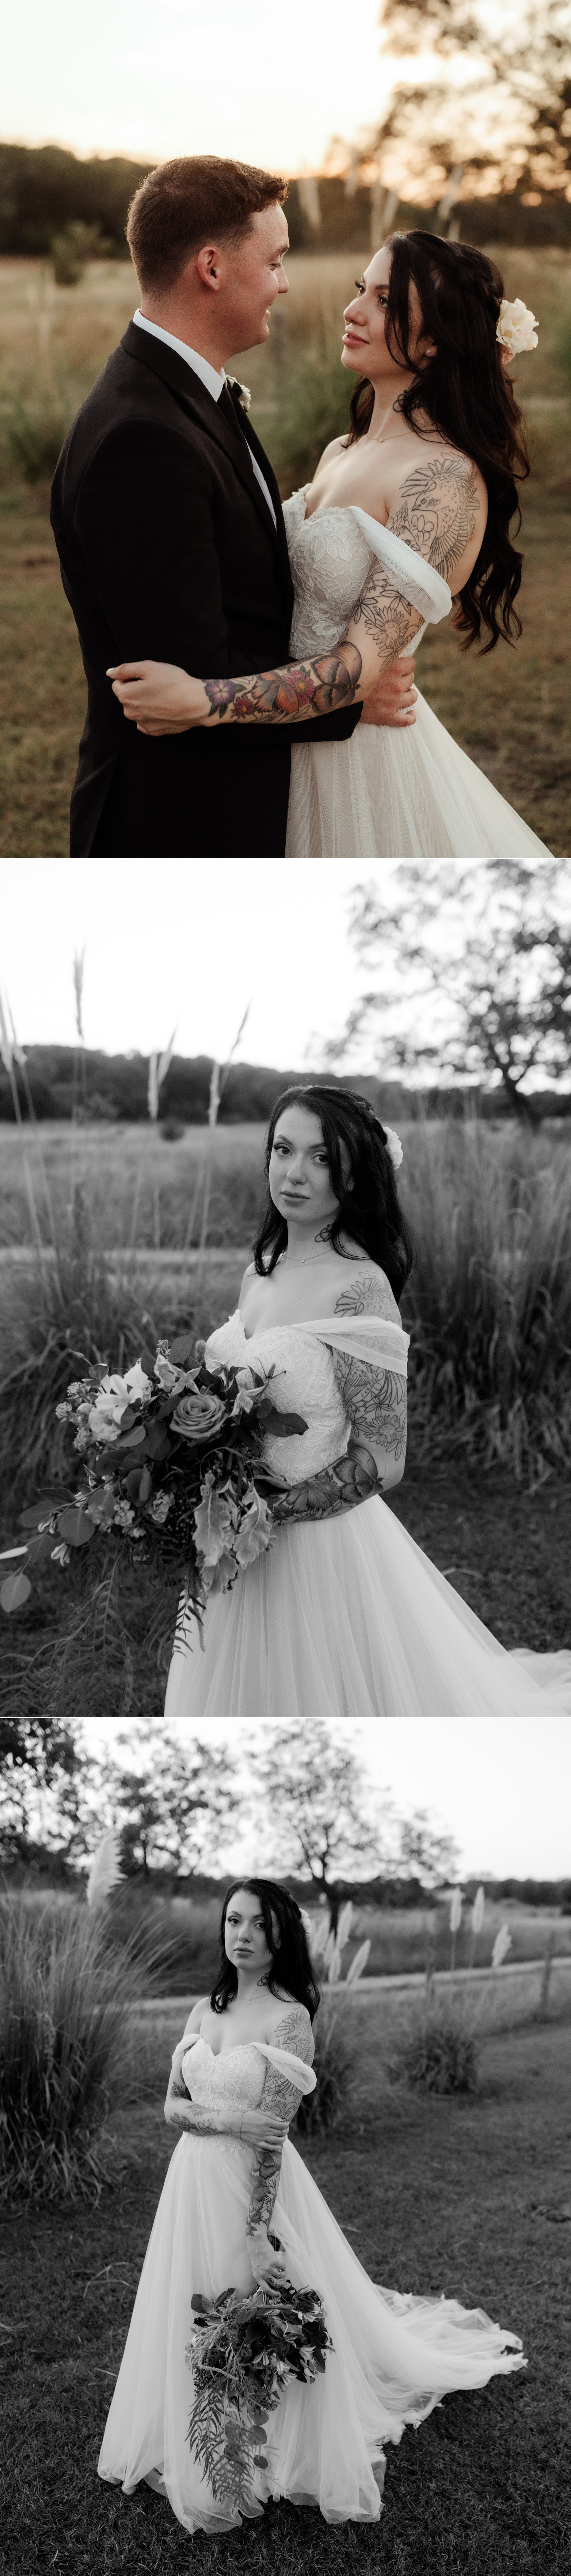 austin-elopement-photographer-wedding_0332.jpg